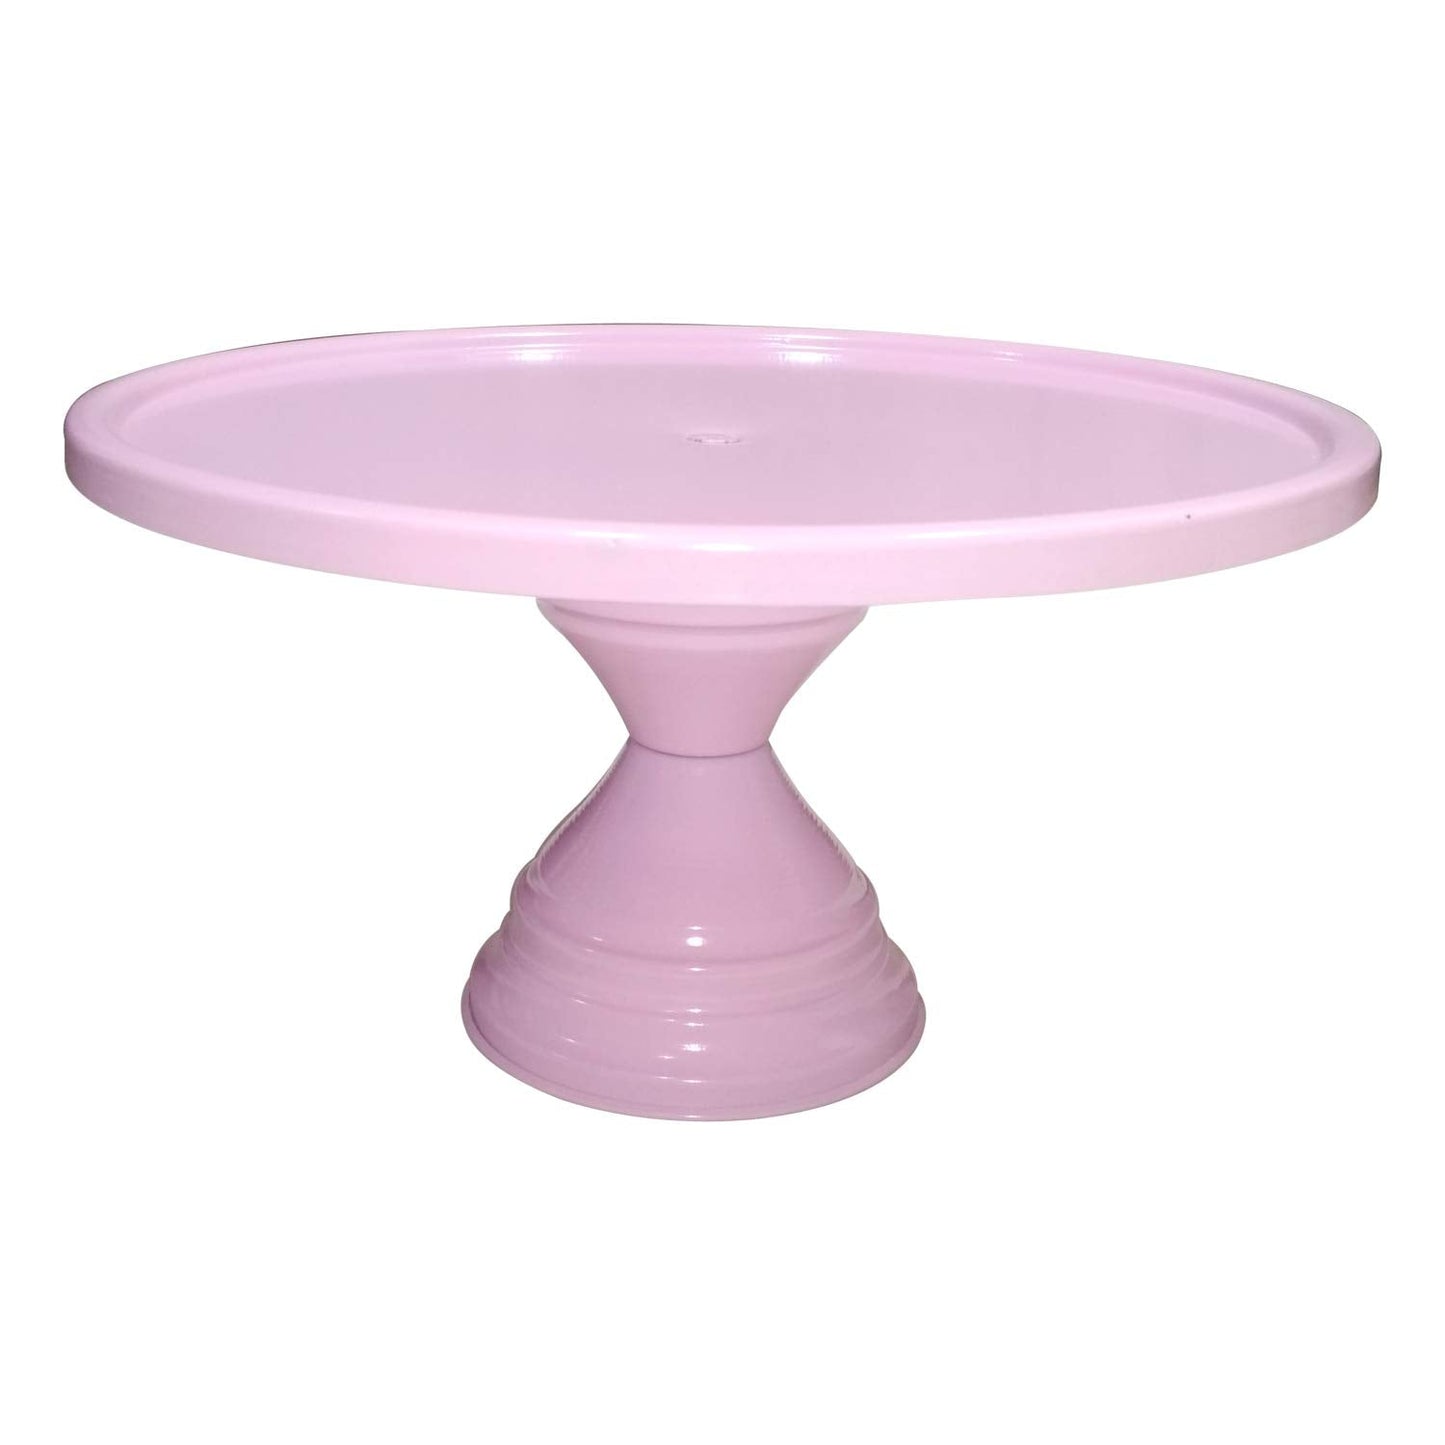 GiftBay Creations Cake Stand Pedestal 11" Diameter (Top), Strong Metal (Pink)